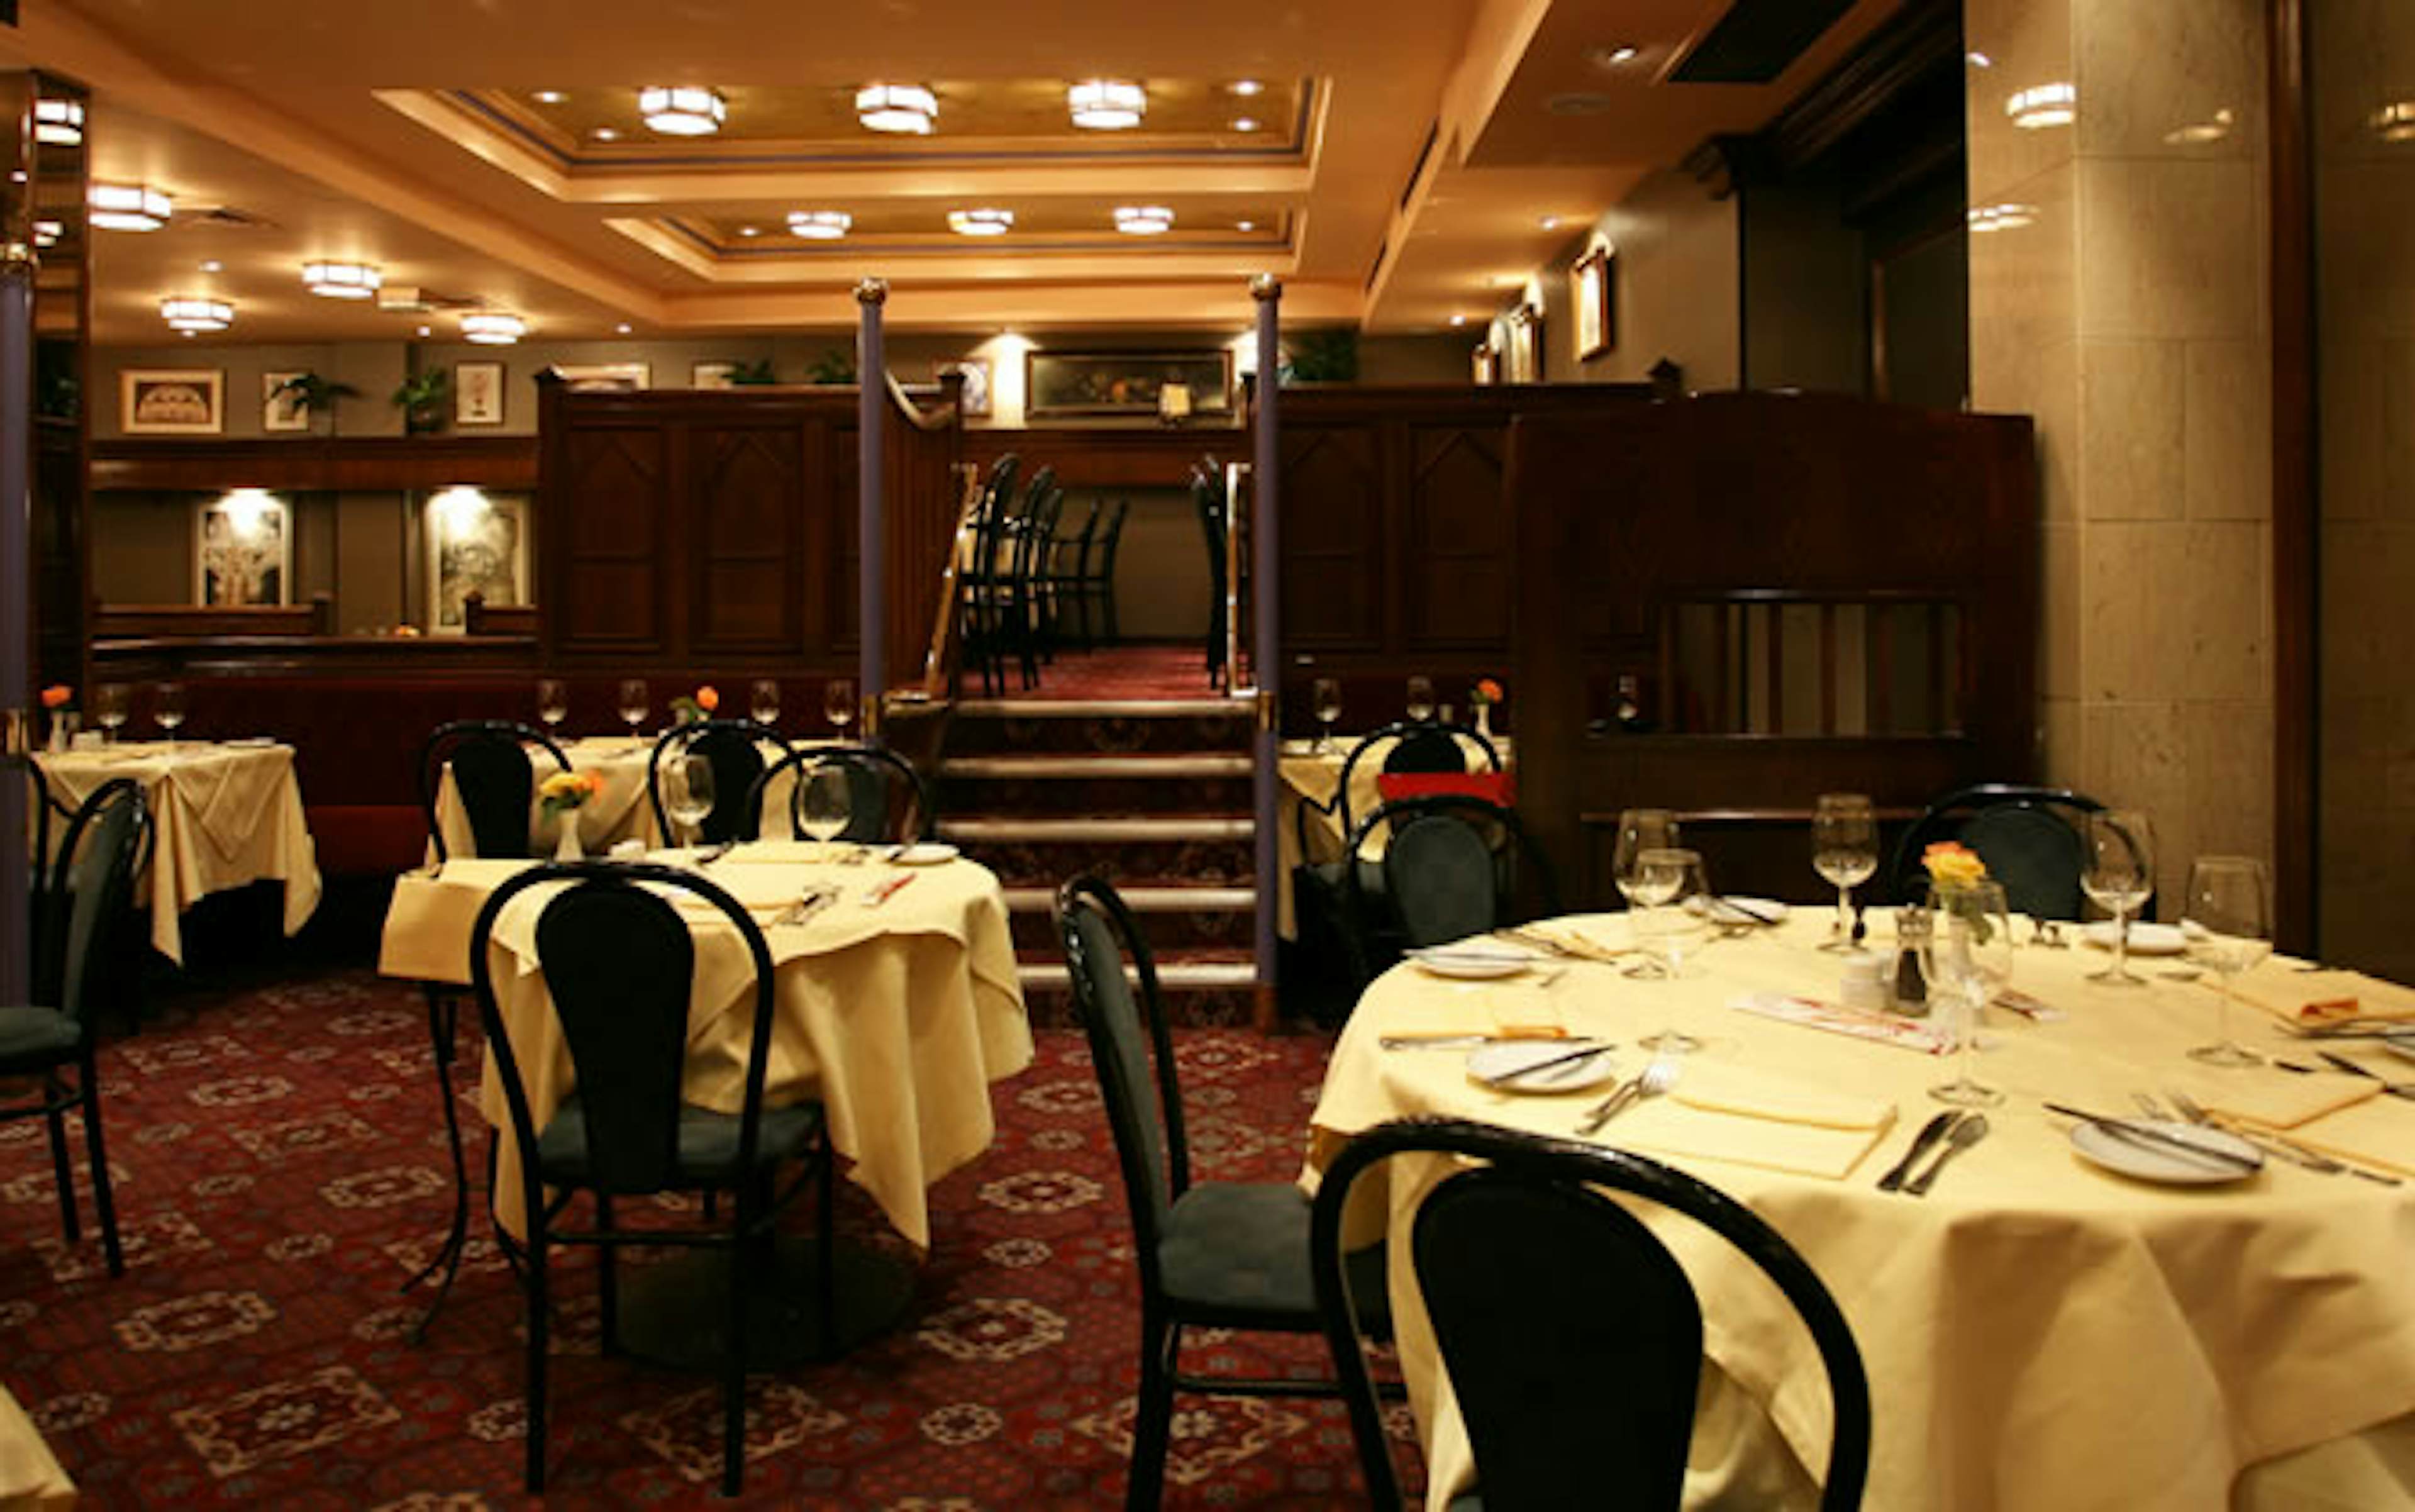 Bolton's - Main Restaurant image 1